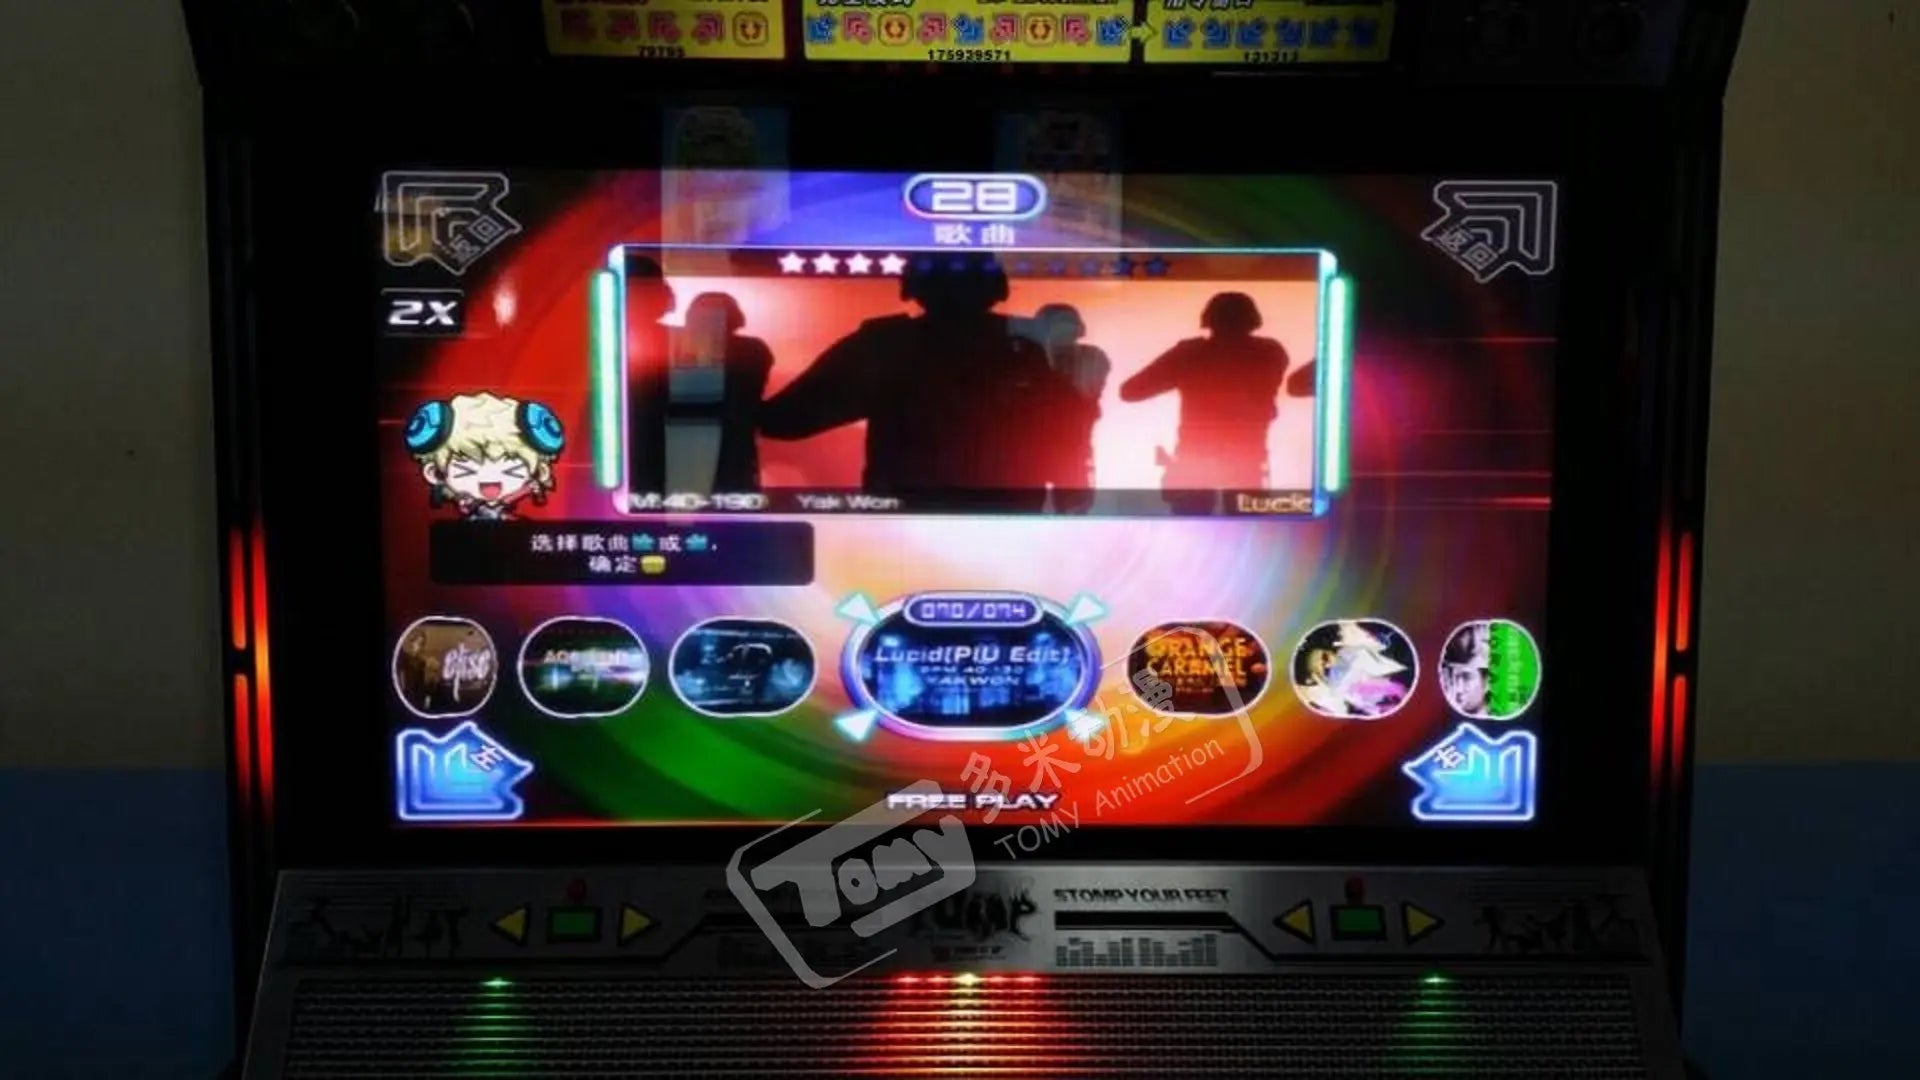 Pump-It-Up-FIESTA-2-PIU-2013-Retro-Andamiro-Amusement-Coin-Operated-musice-Dancing-Game-Machine-Tomy-Arcade